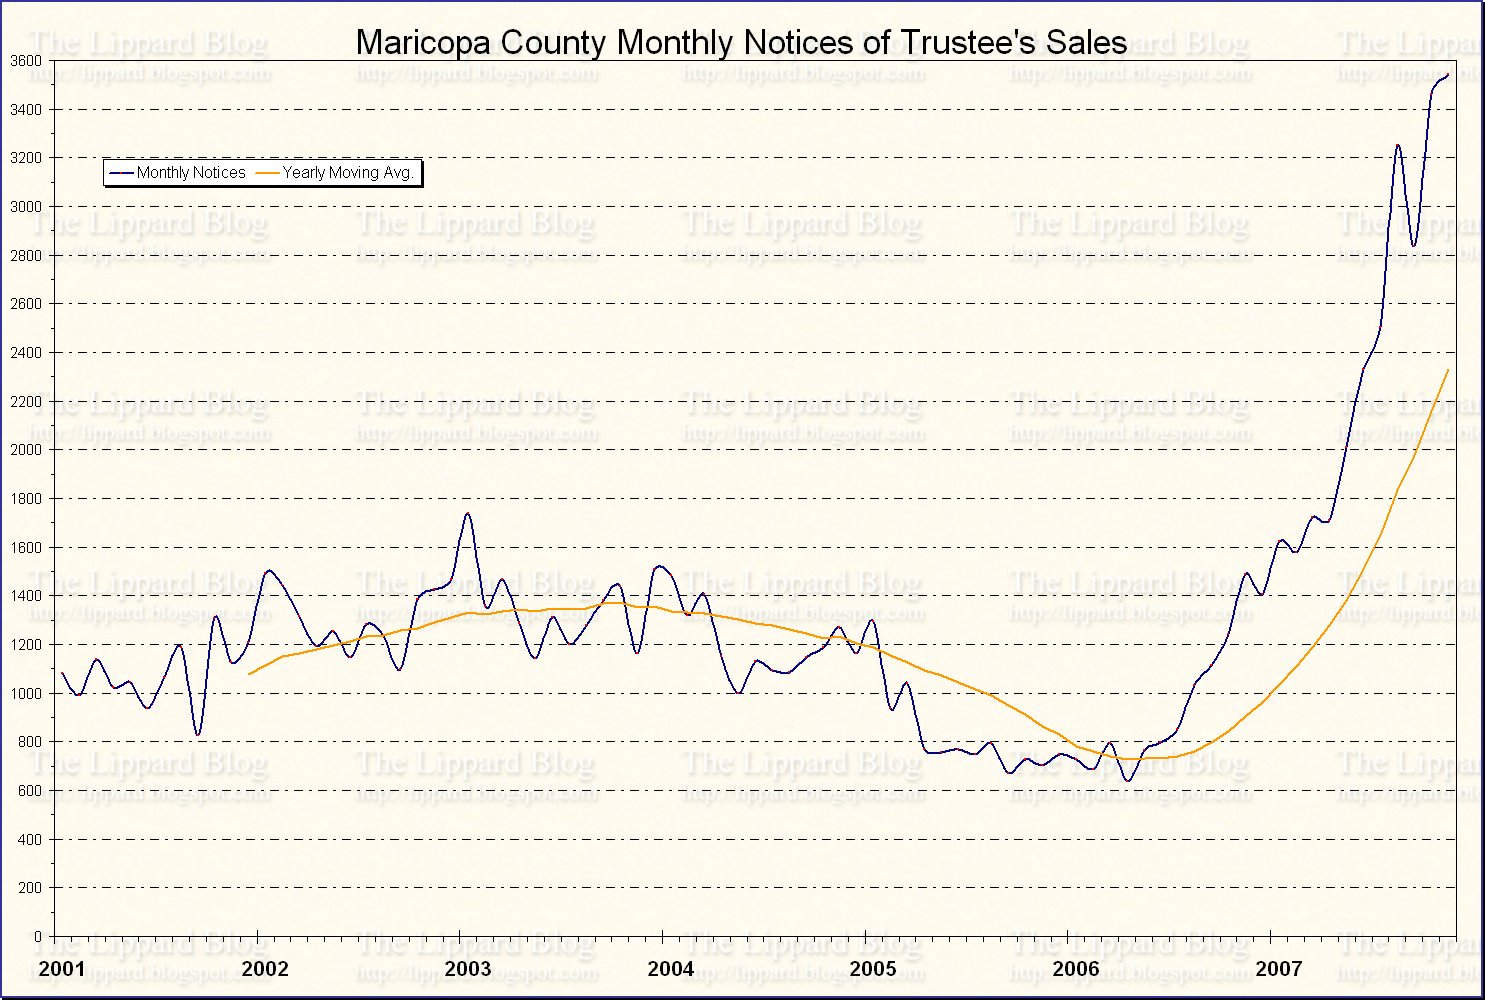 Maricopa County Notices of Trustee's Sales, Jan 2001 to Nov 2007